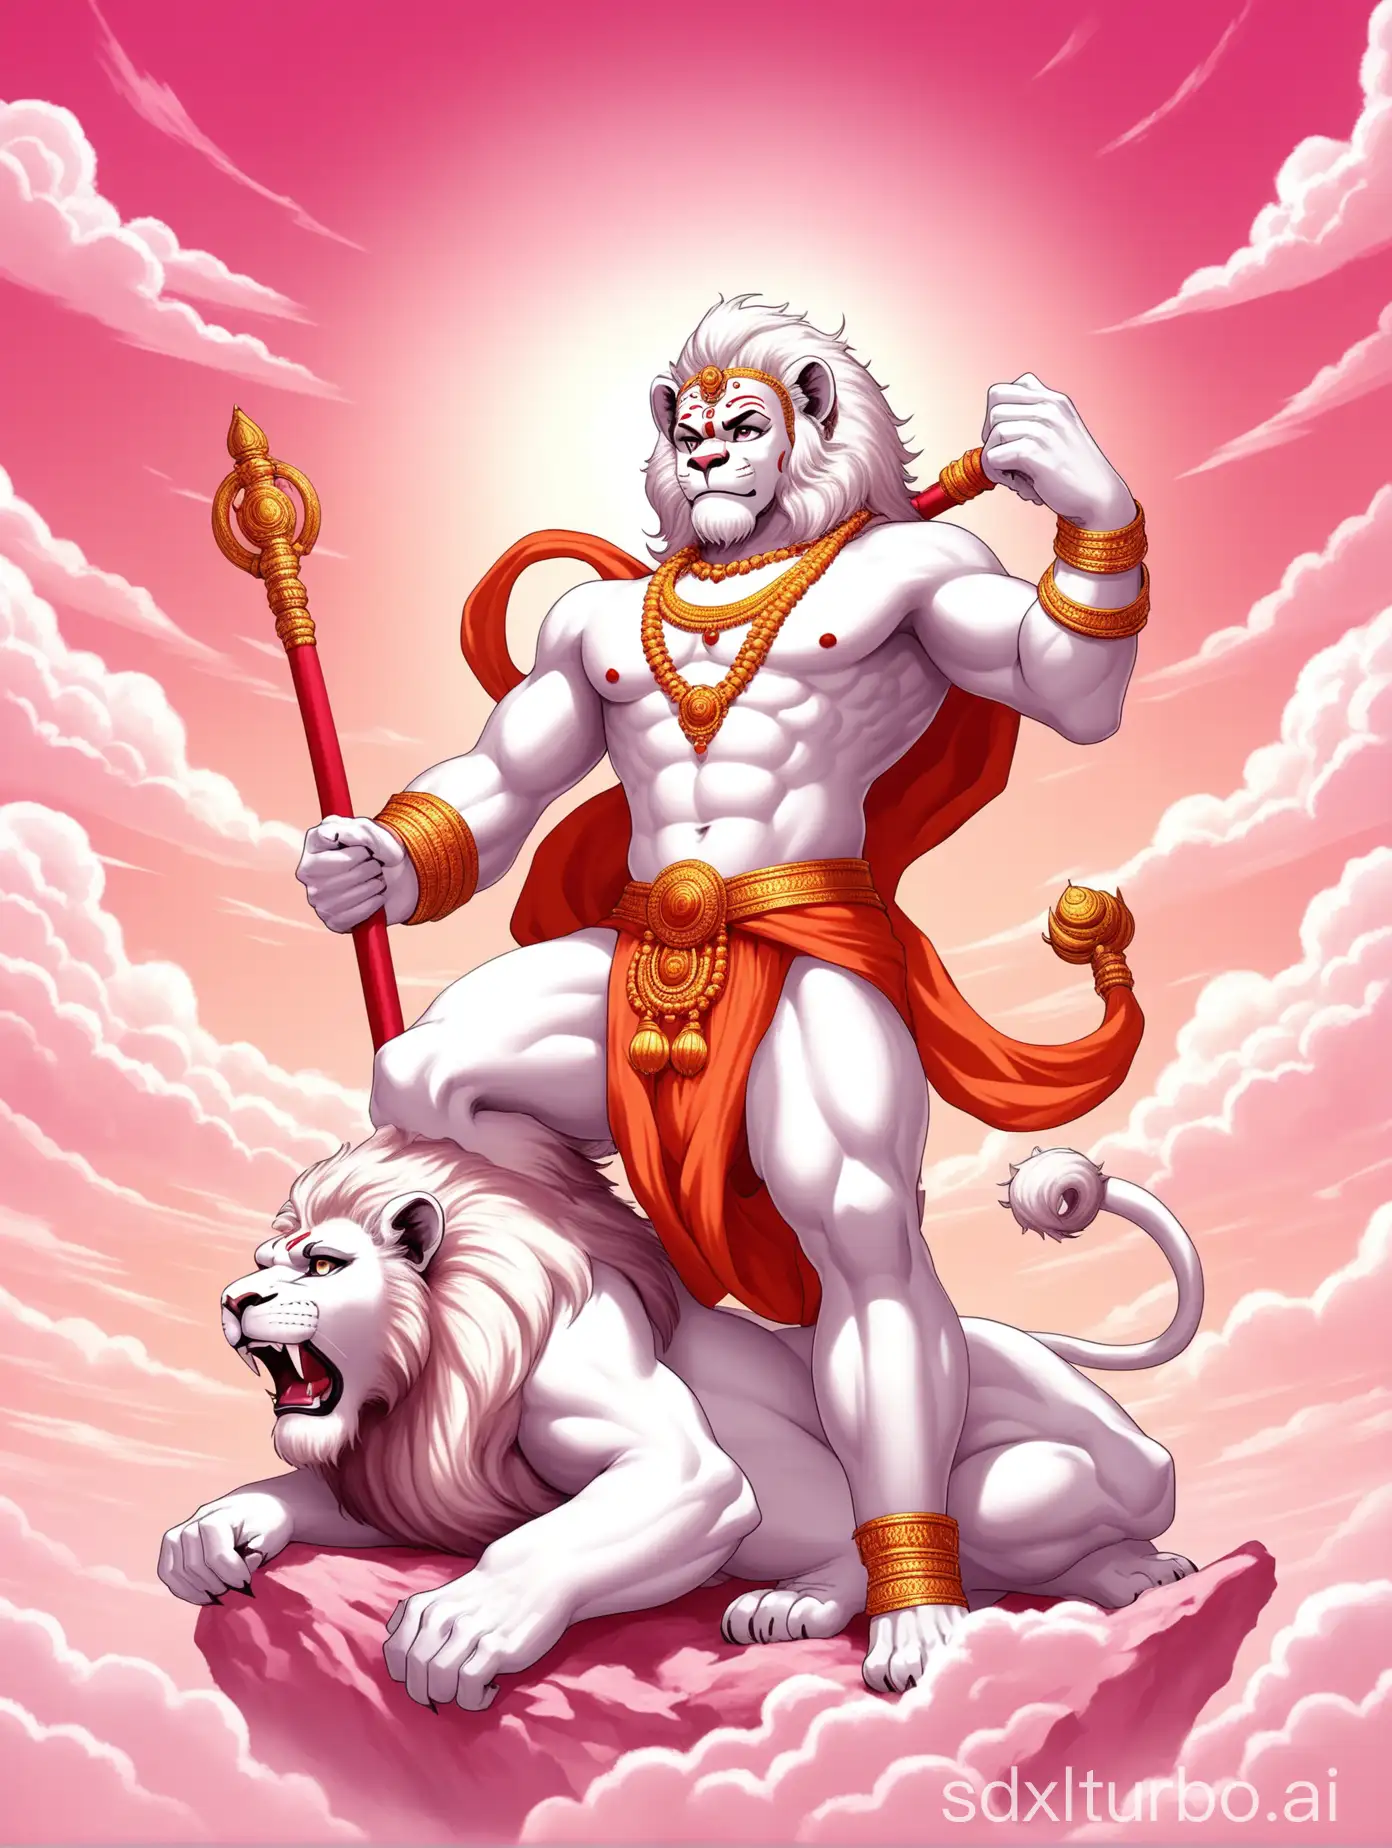 Teenage-Hanuman-Superhero-in-Pink-Sky-with-White-Clouds